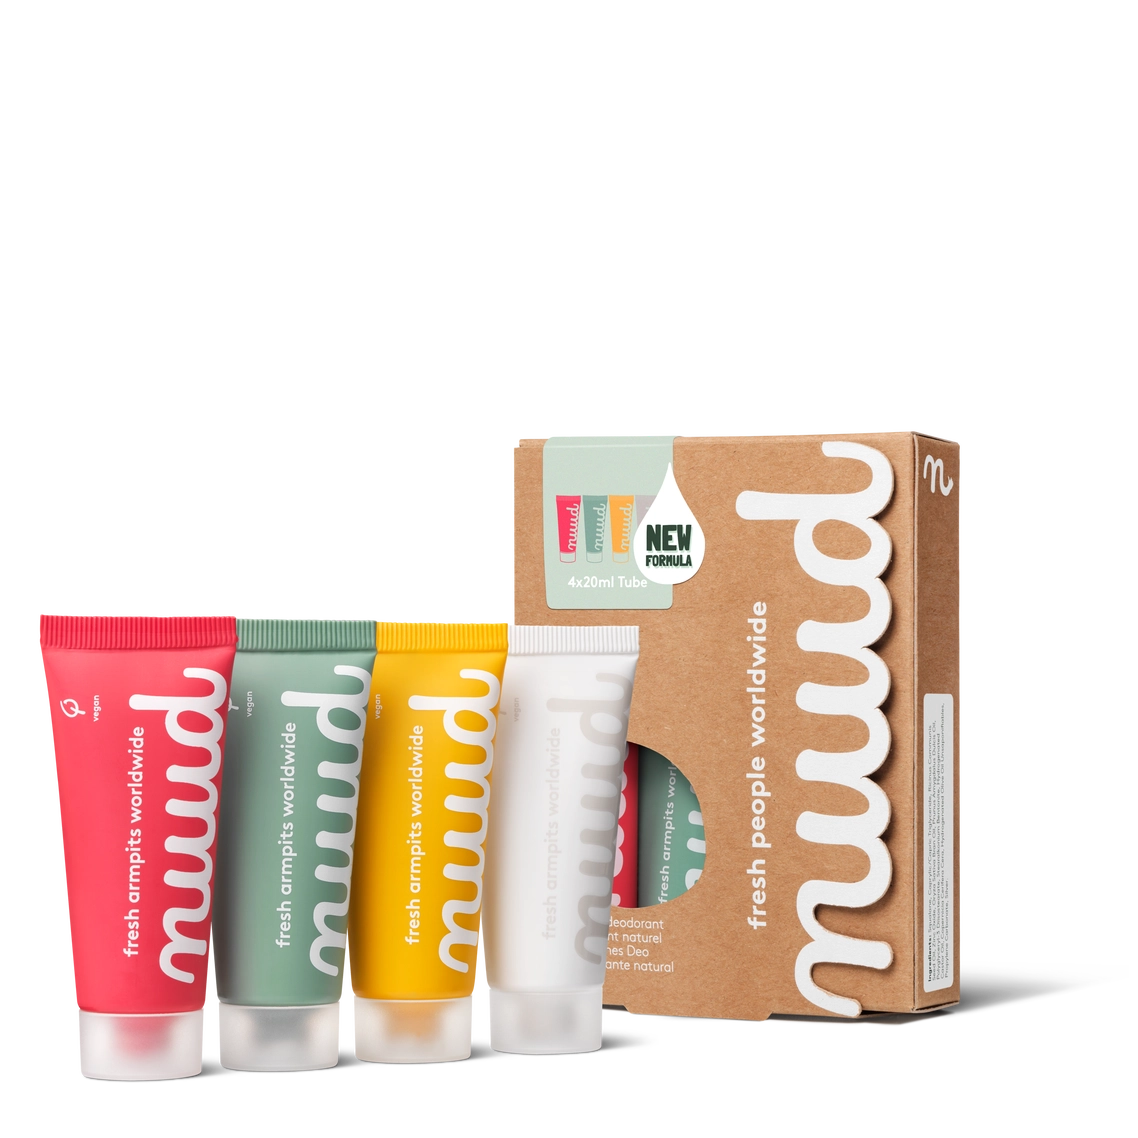 Nuud Vegan Deodorant - Family Pack